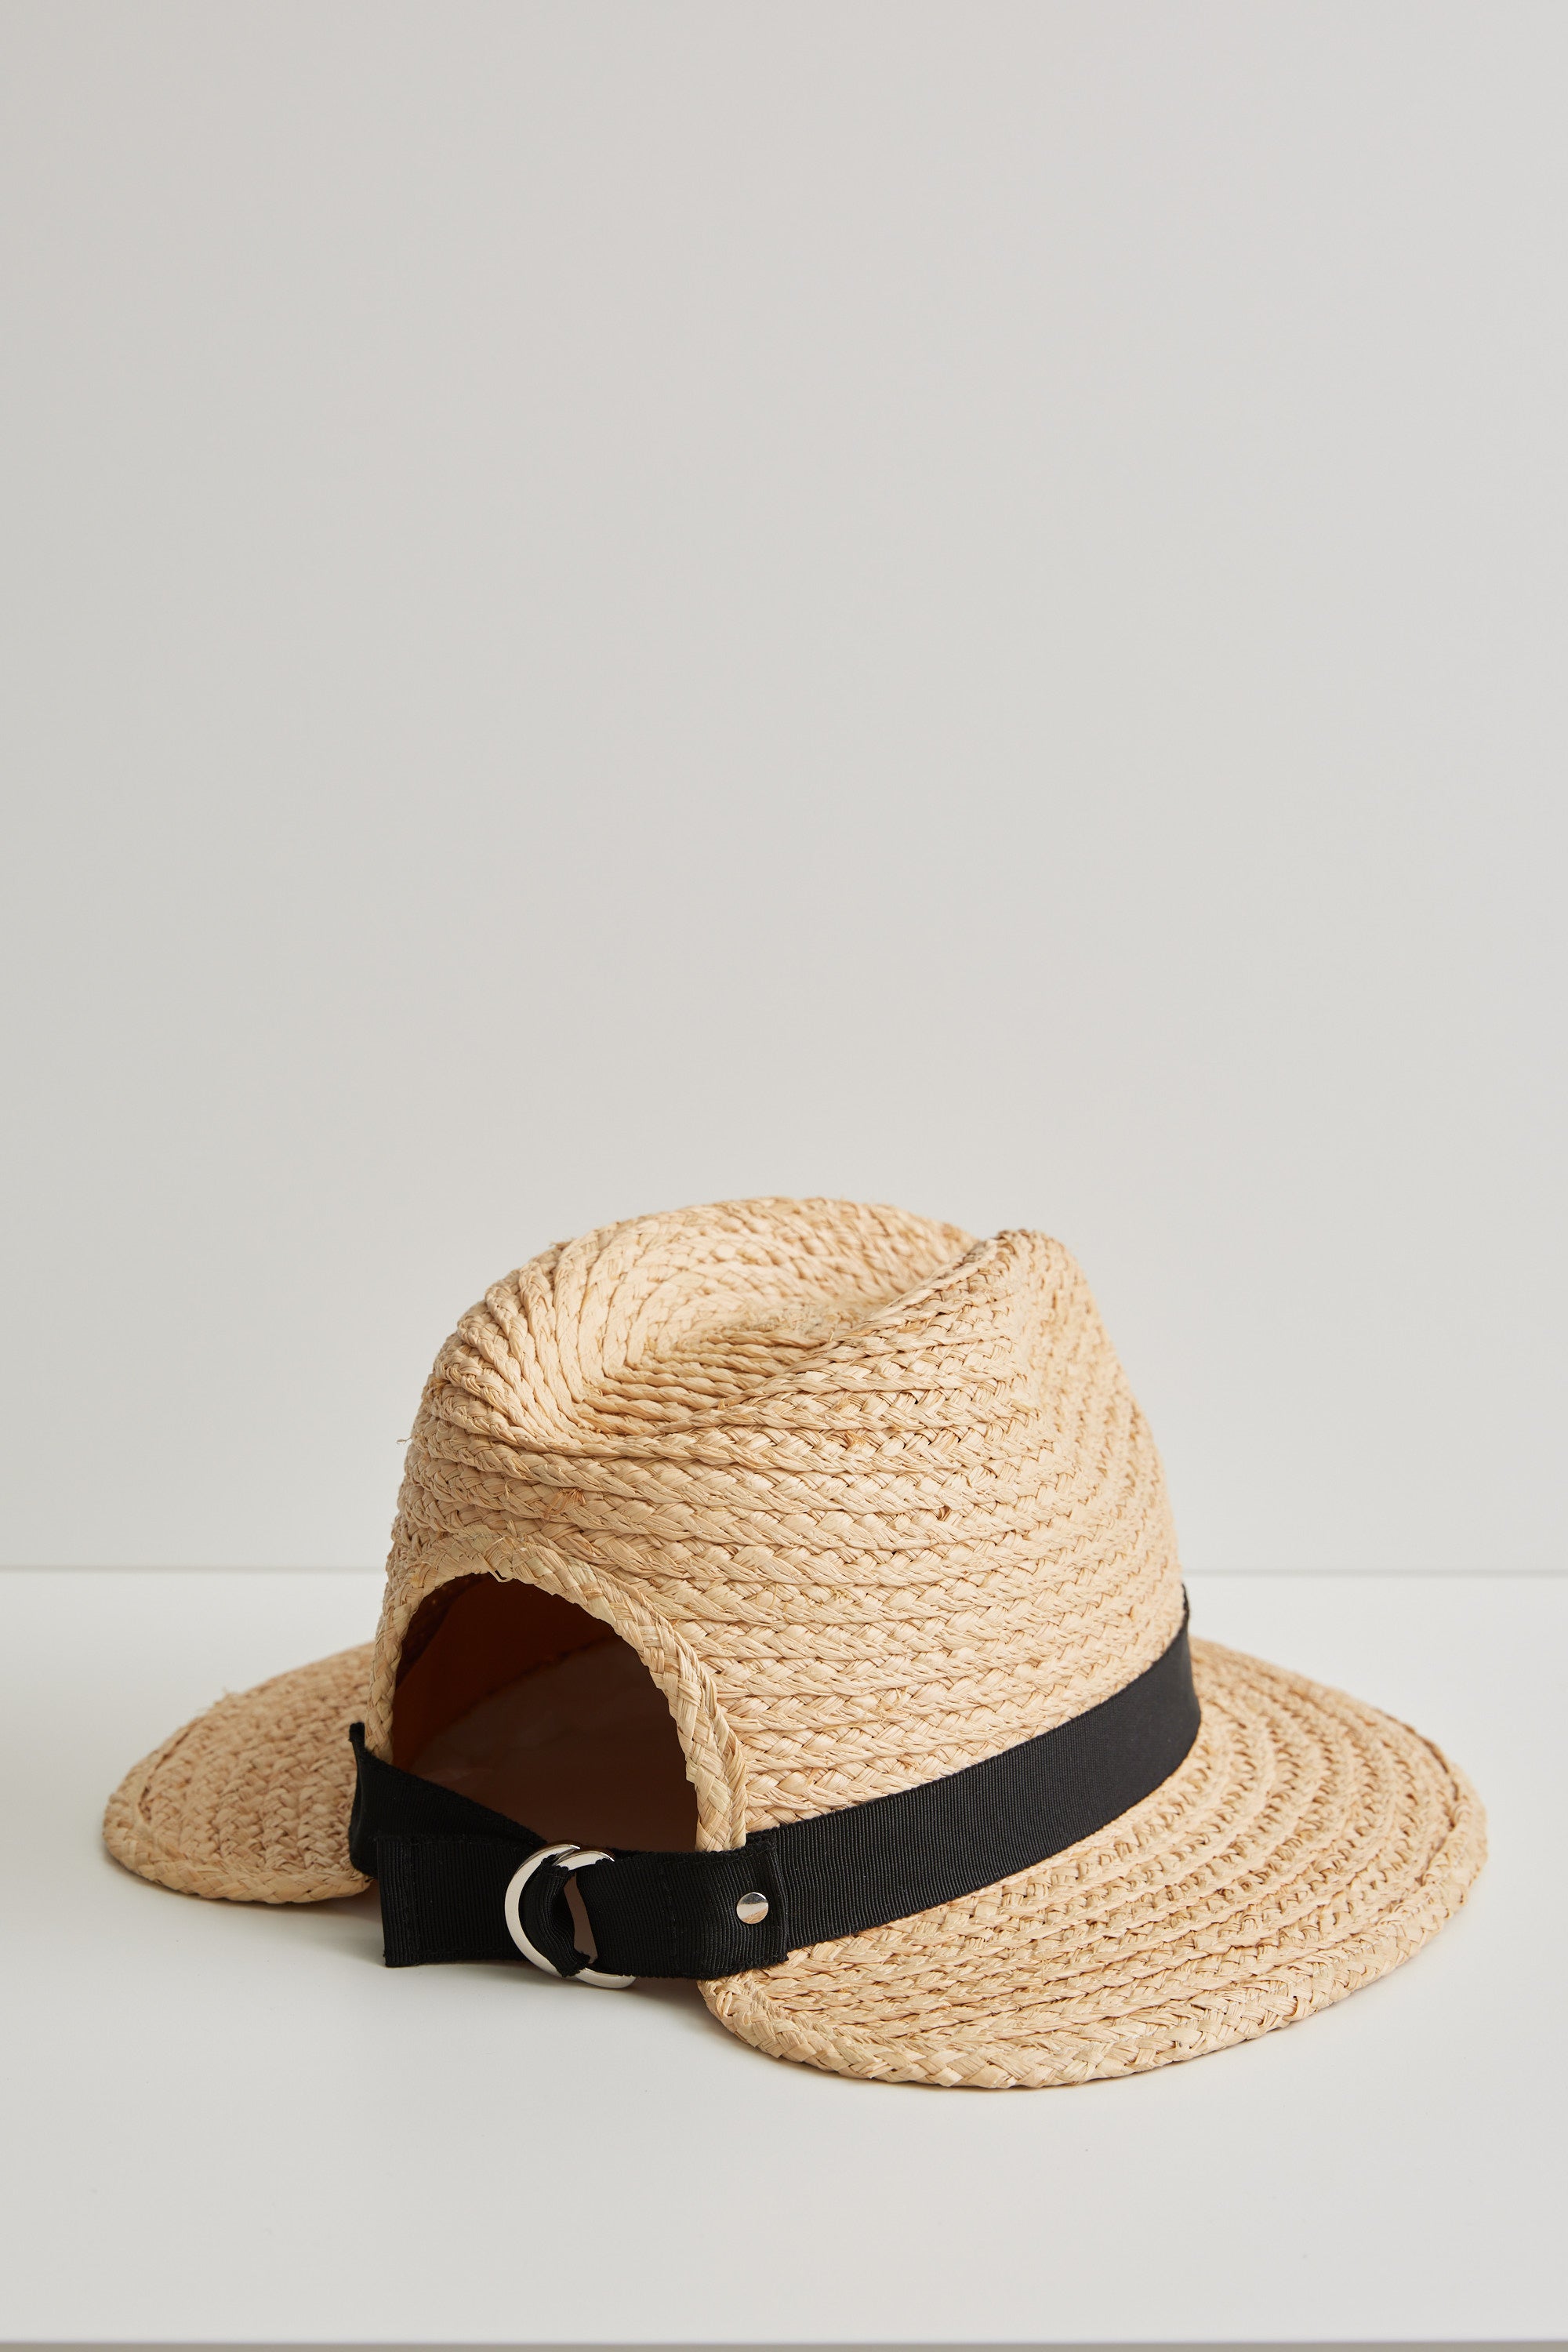 Anemone - Adjustable straw fedora hat - Black ribbon